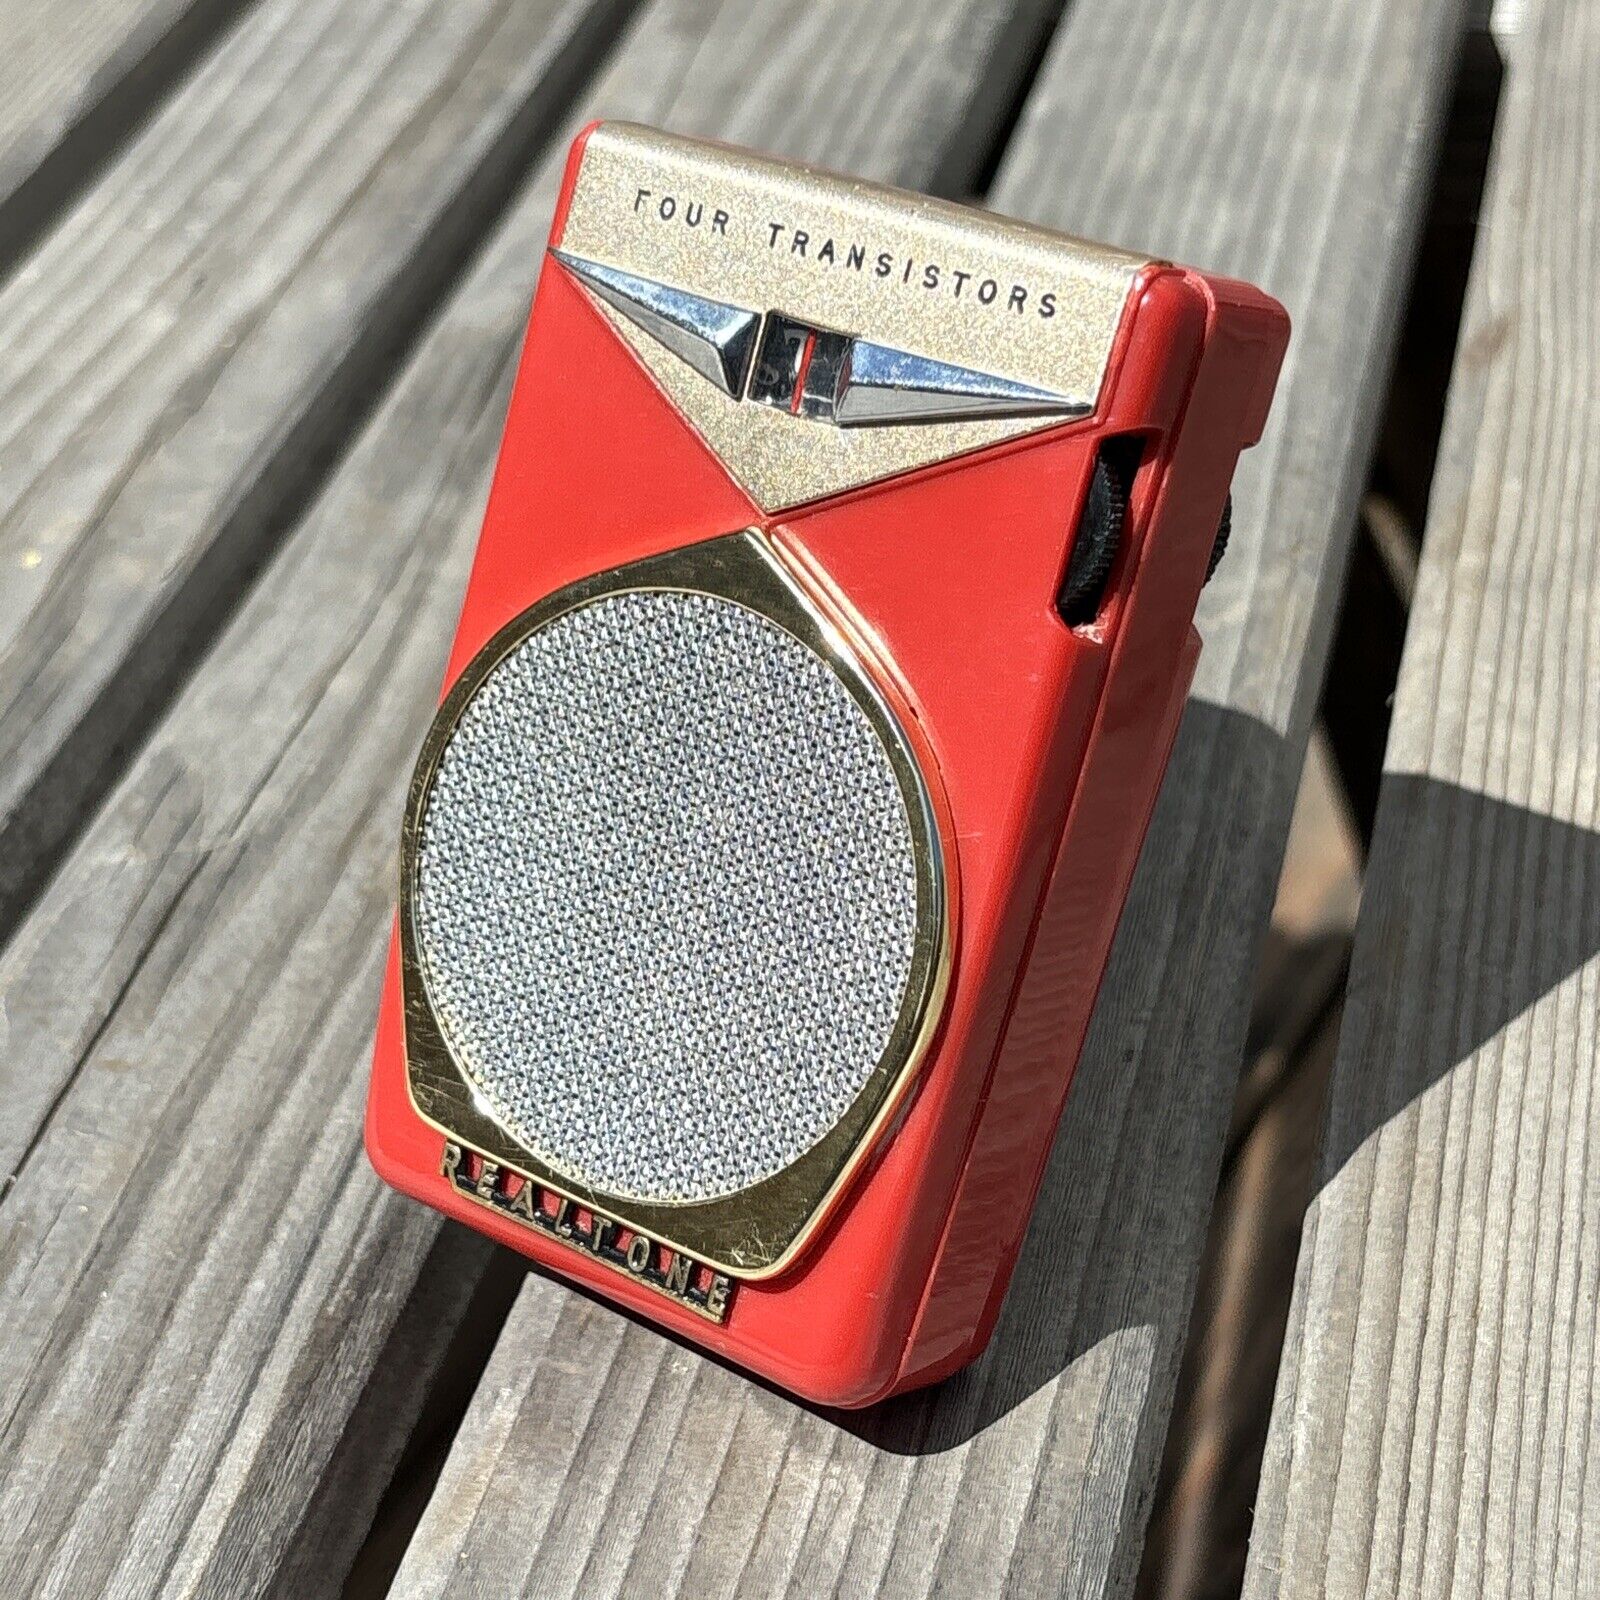 REALTONE TR-555 4 Transistor Radio - RARE RED JAPAN BEAUTY